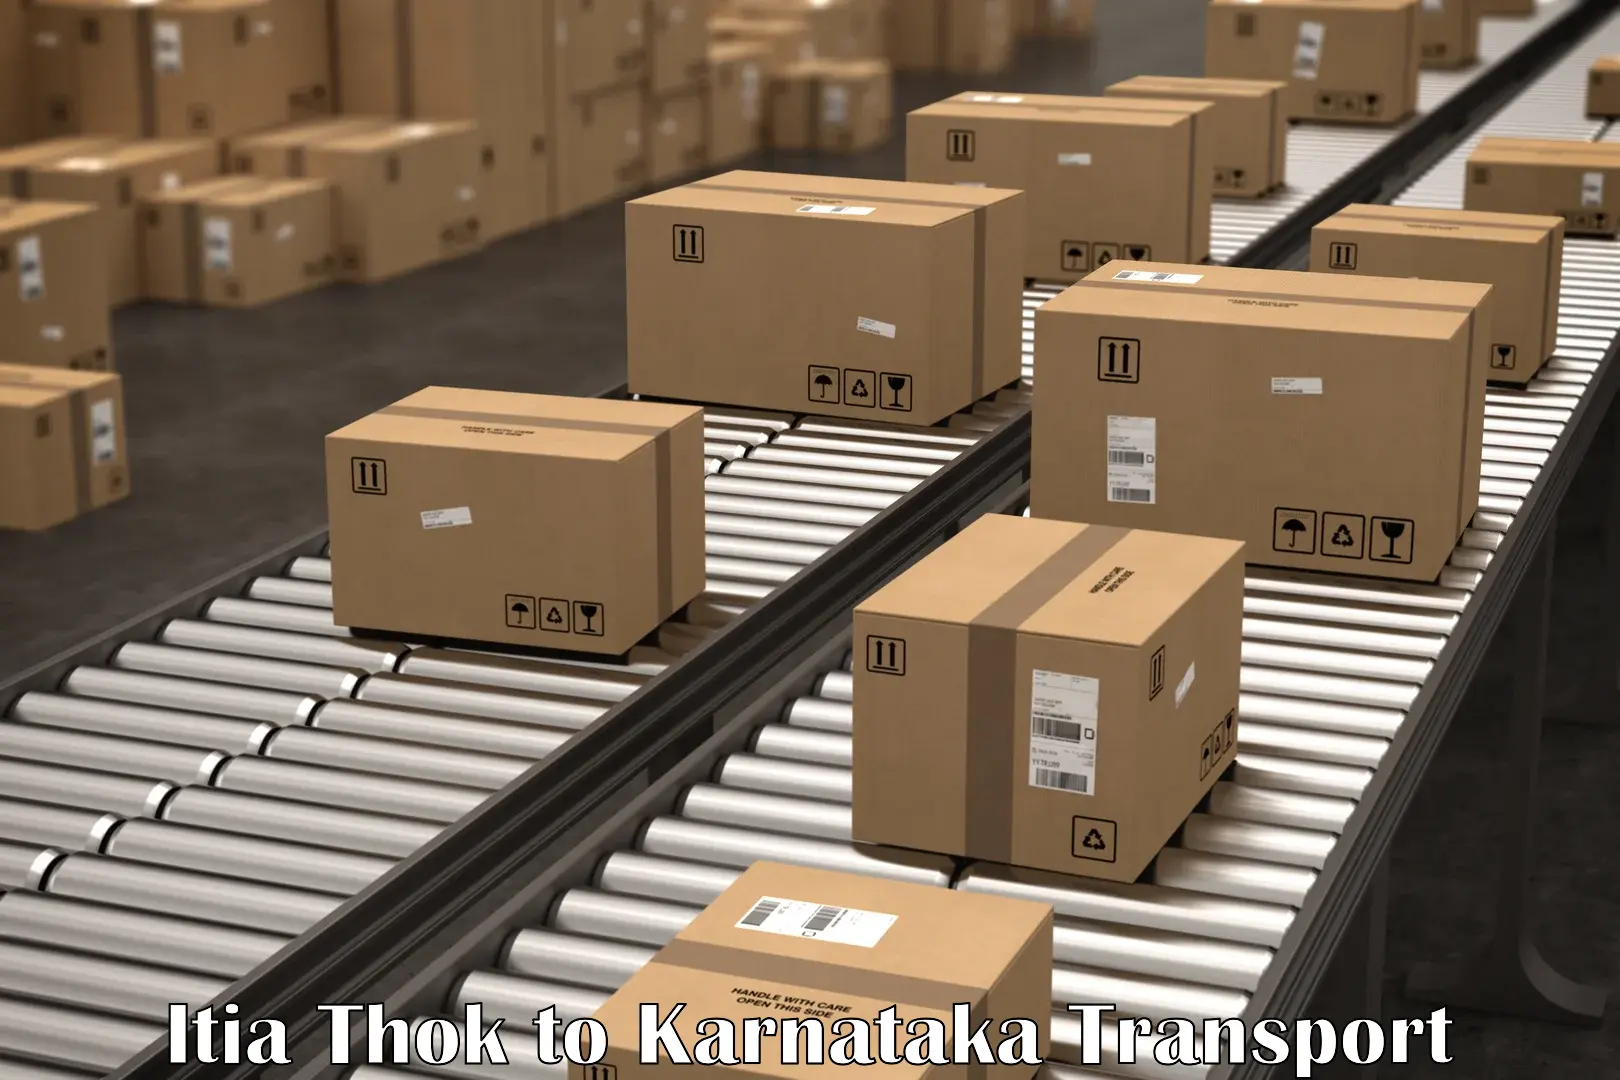 Furniture transport service Itia Thok to Karnataka